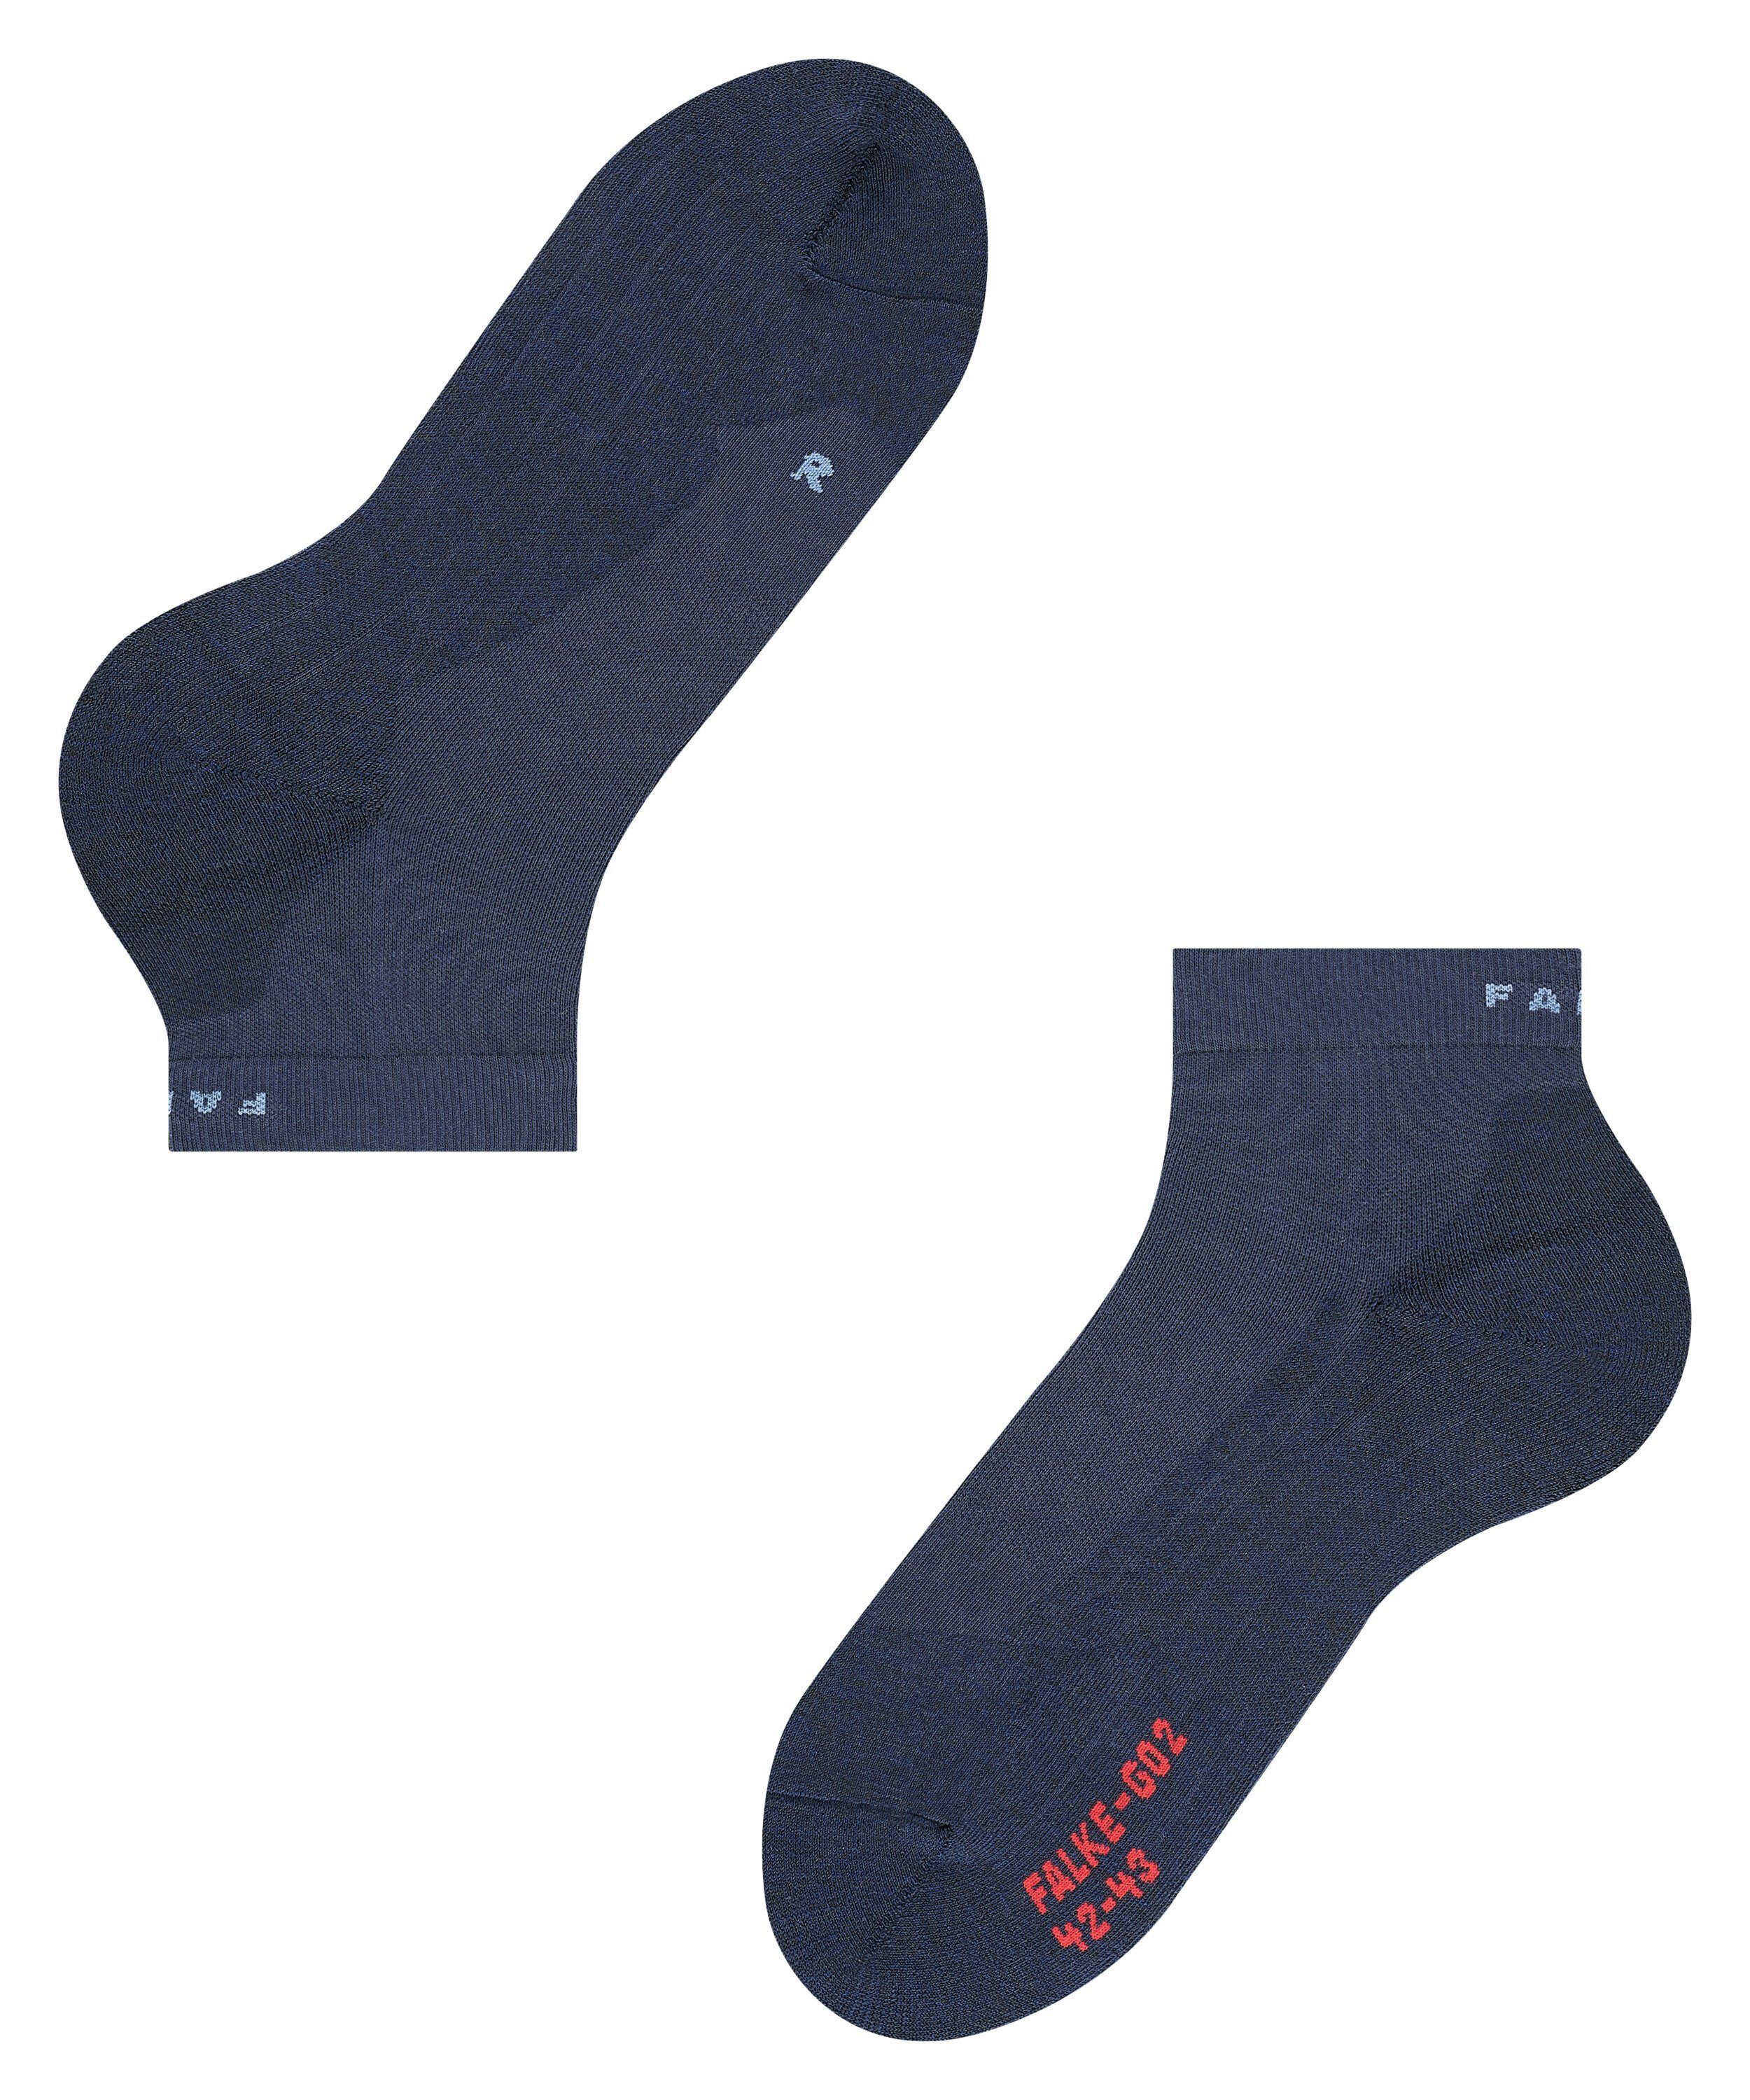 FALKE (6116) Sportsocken für Polsterung GO2 mittelstarker (1-Paar) Short space Spikeschuhe mit blue